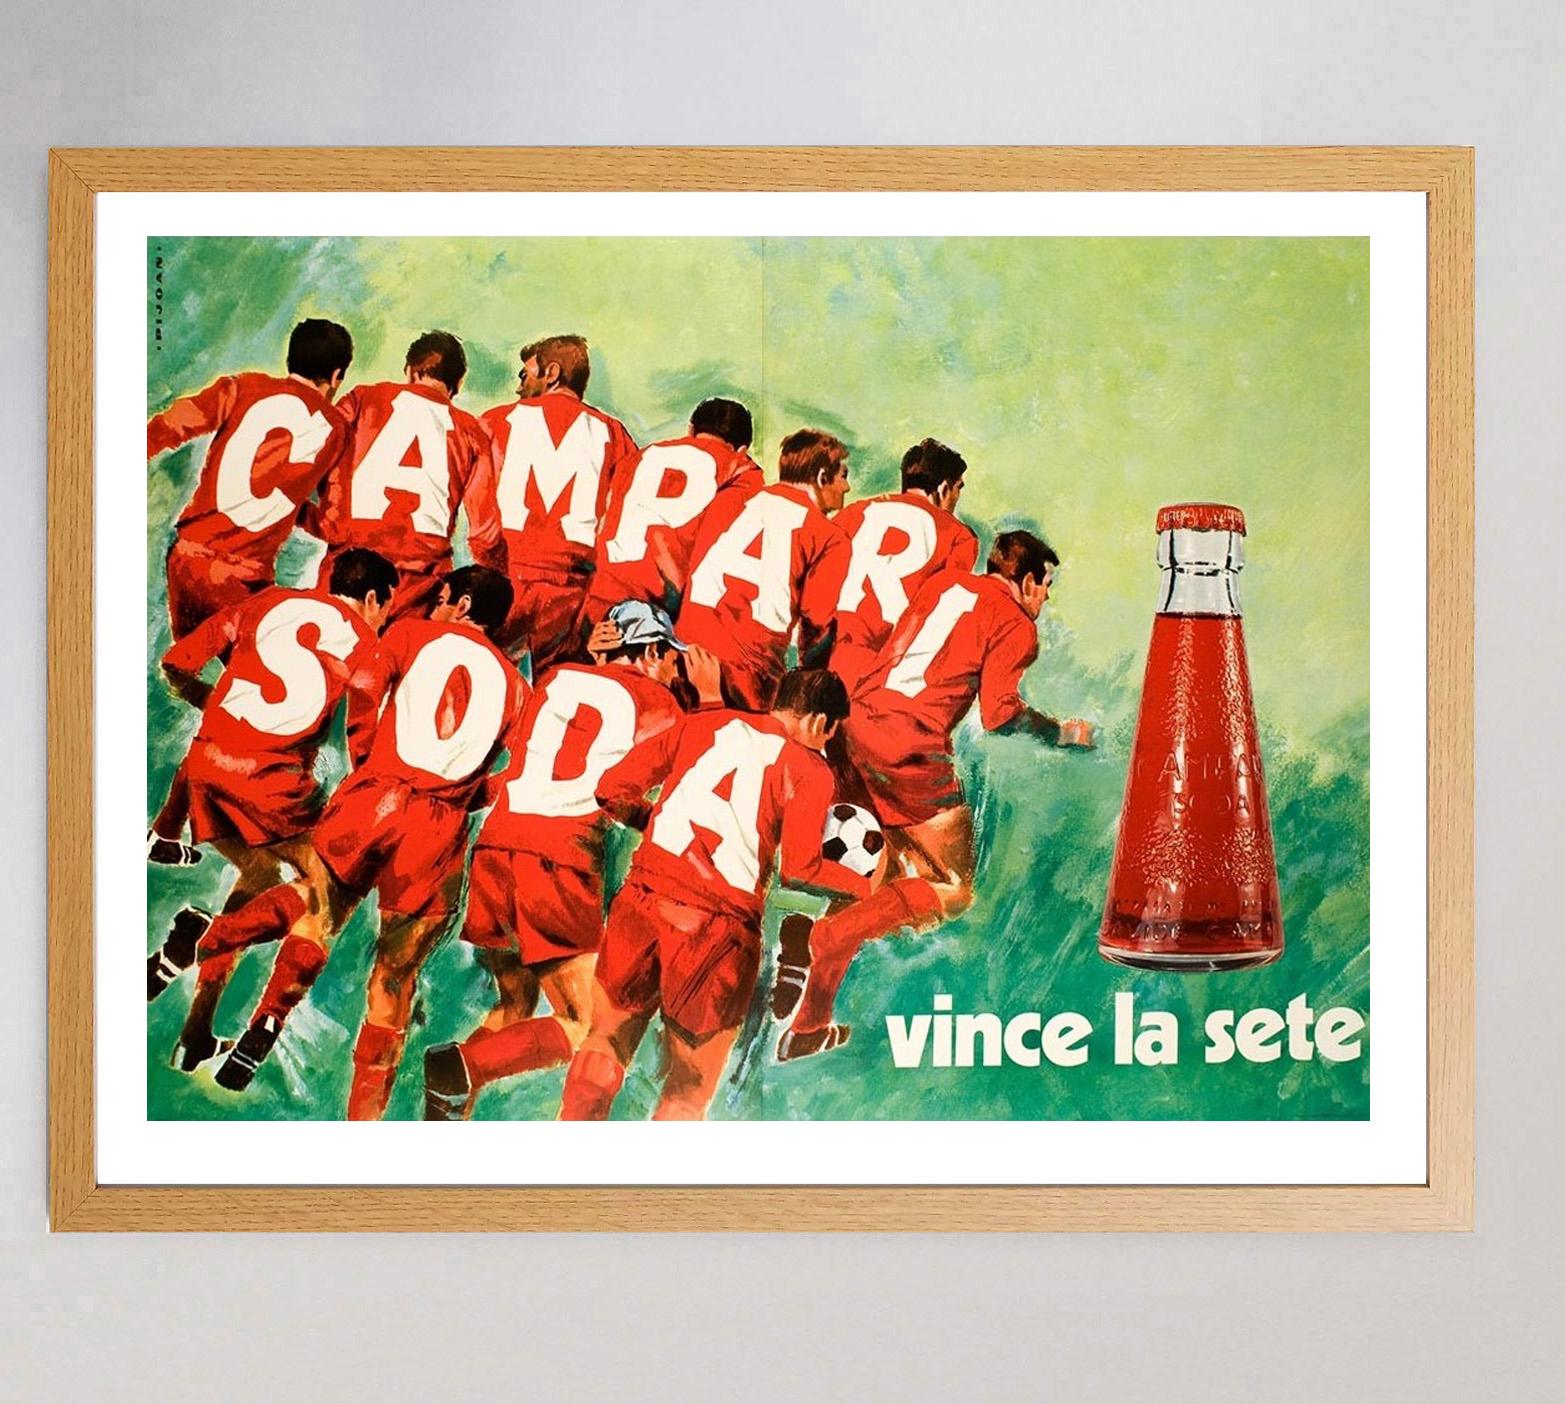 Italian 1970 Campari Soda - Vince La Sete Original Vintage Poster For Sale